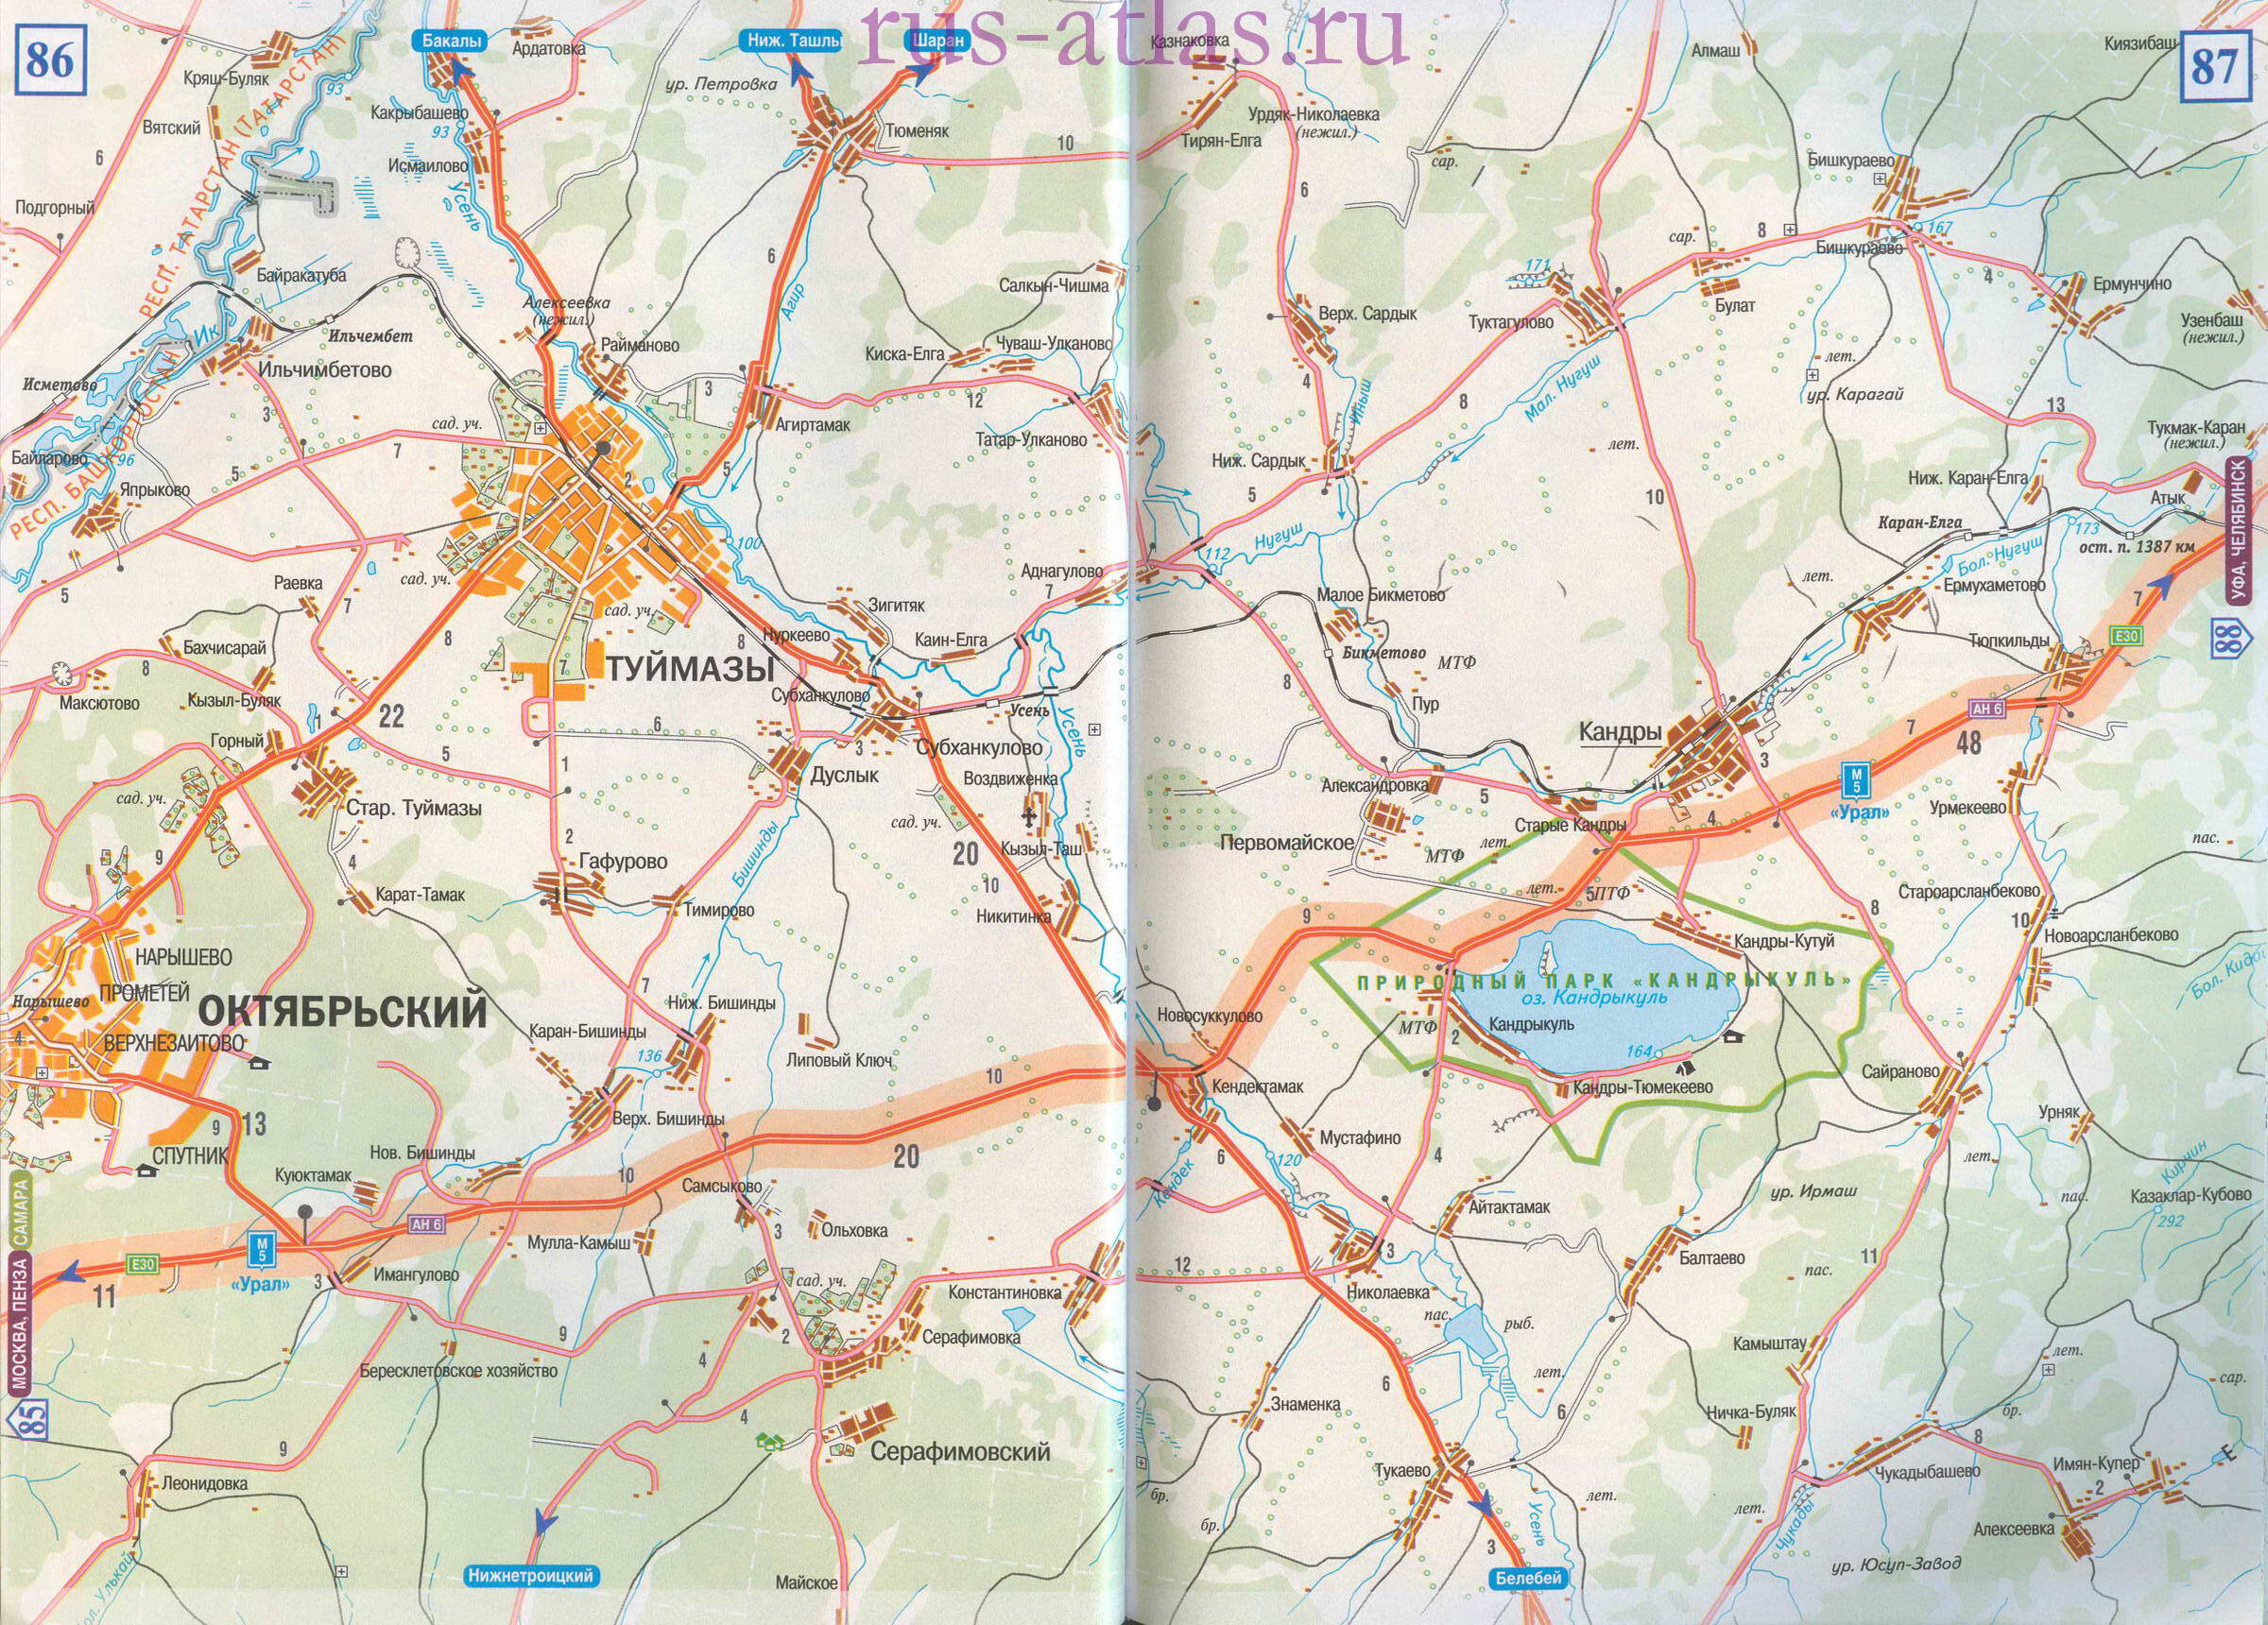 Автомобильная дорога м5 Урал на карте